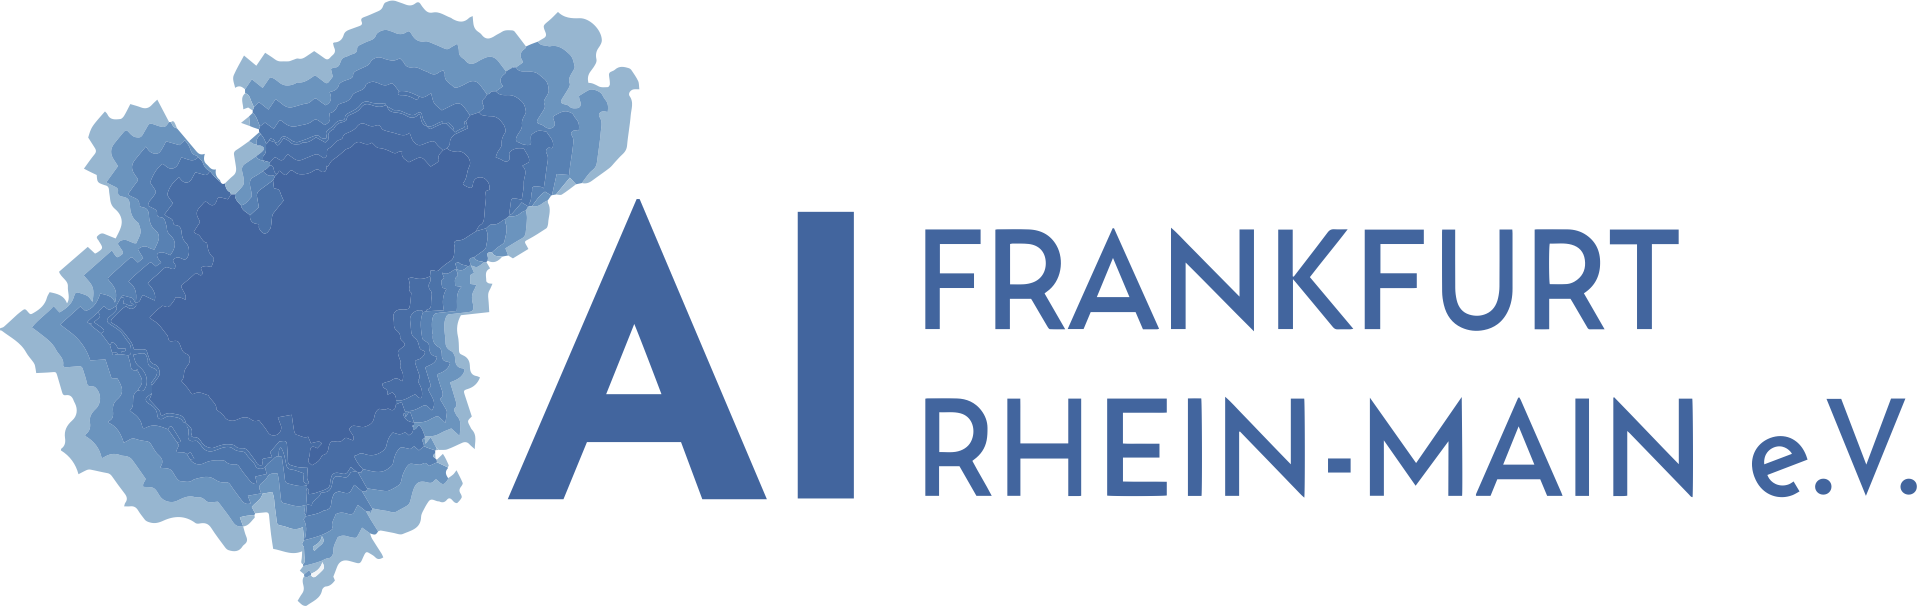 Das Logo des AI Frankfurt Rhein-Main e.V.